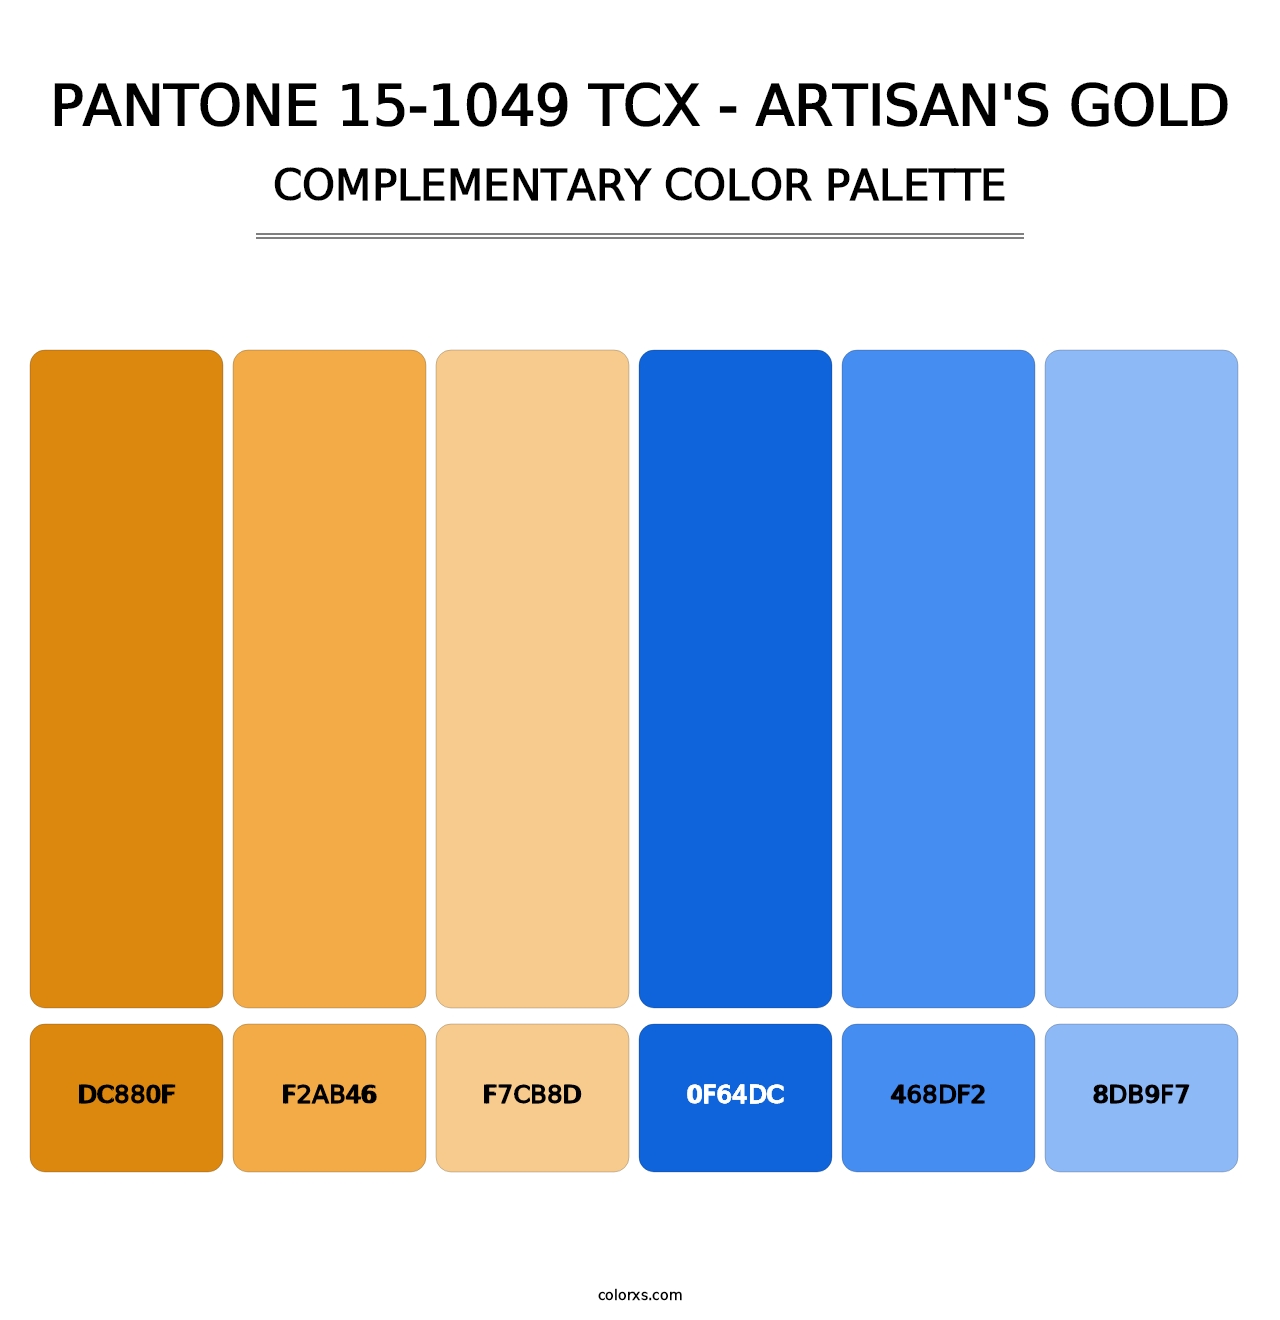 PANTONE 15-1049 TCX - Artisan's Gold - Complementary Color Palette